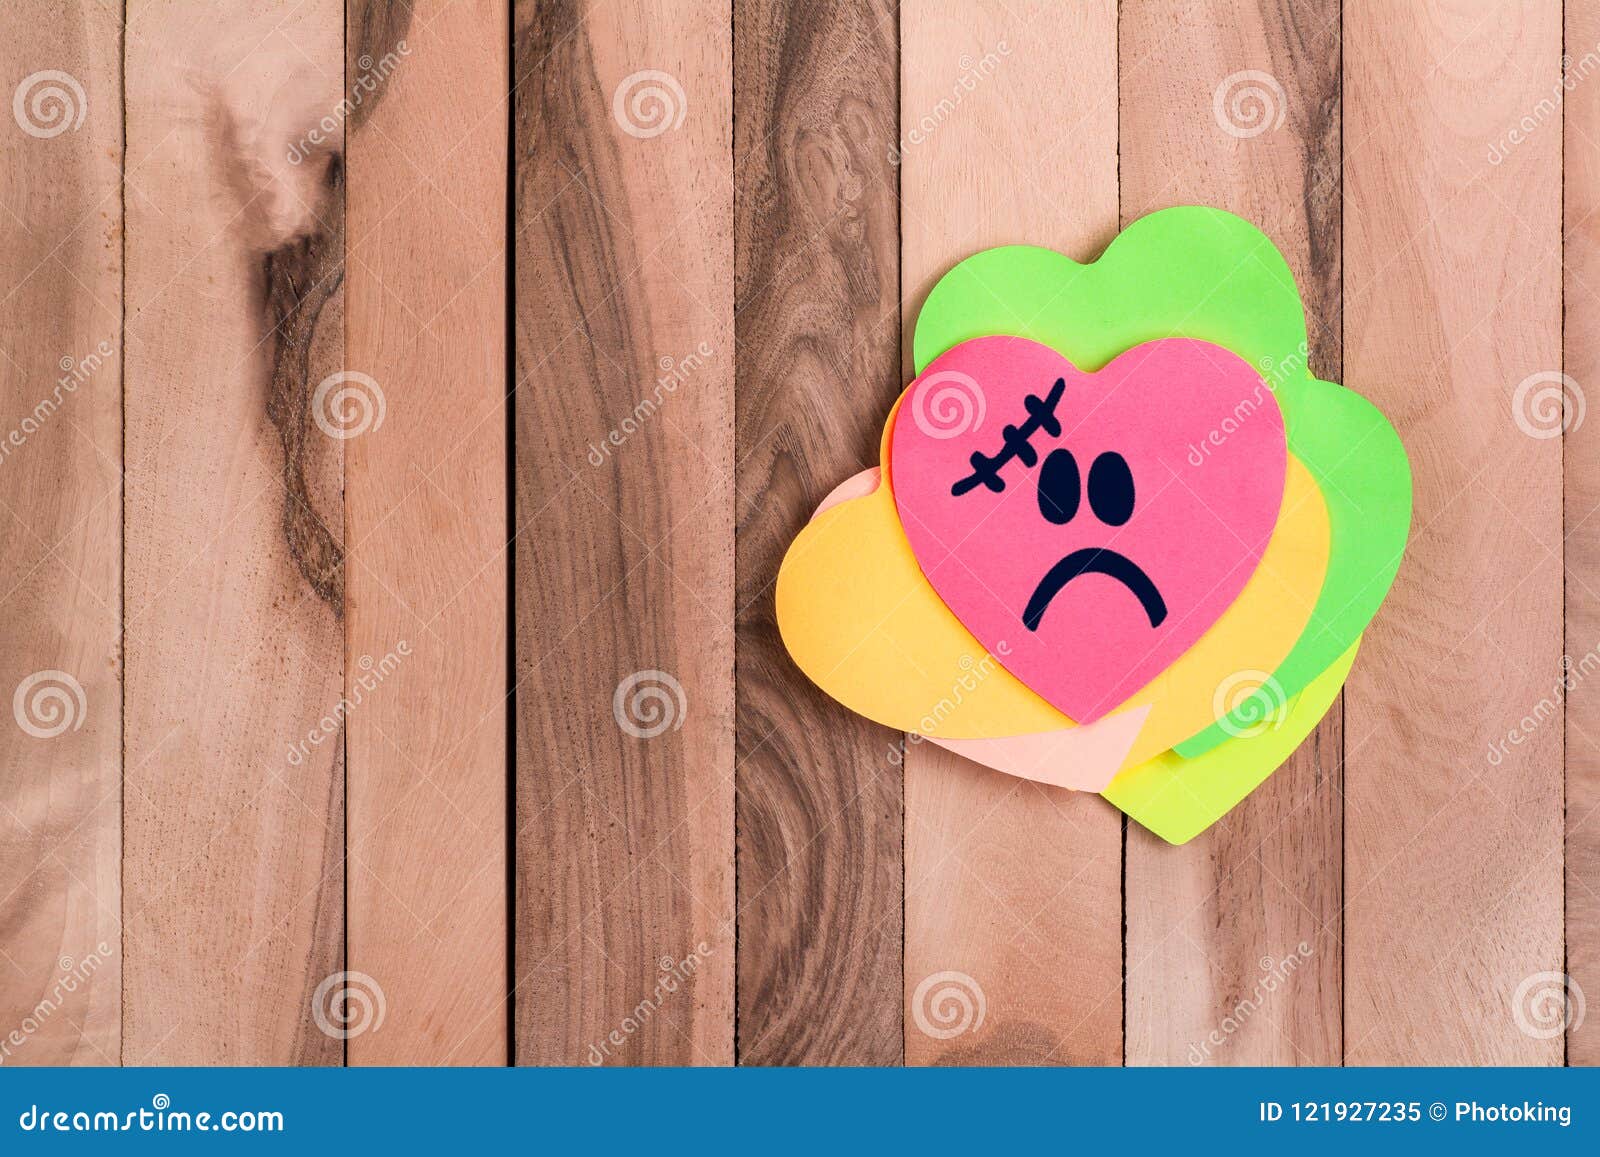 cute heart traumatic emoji